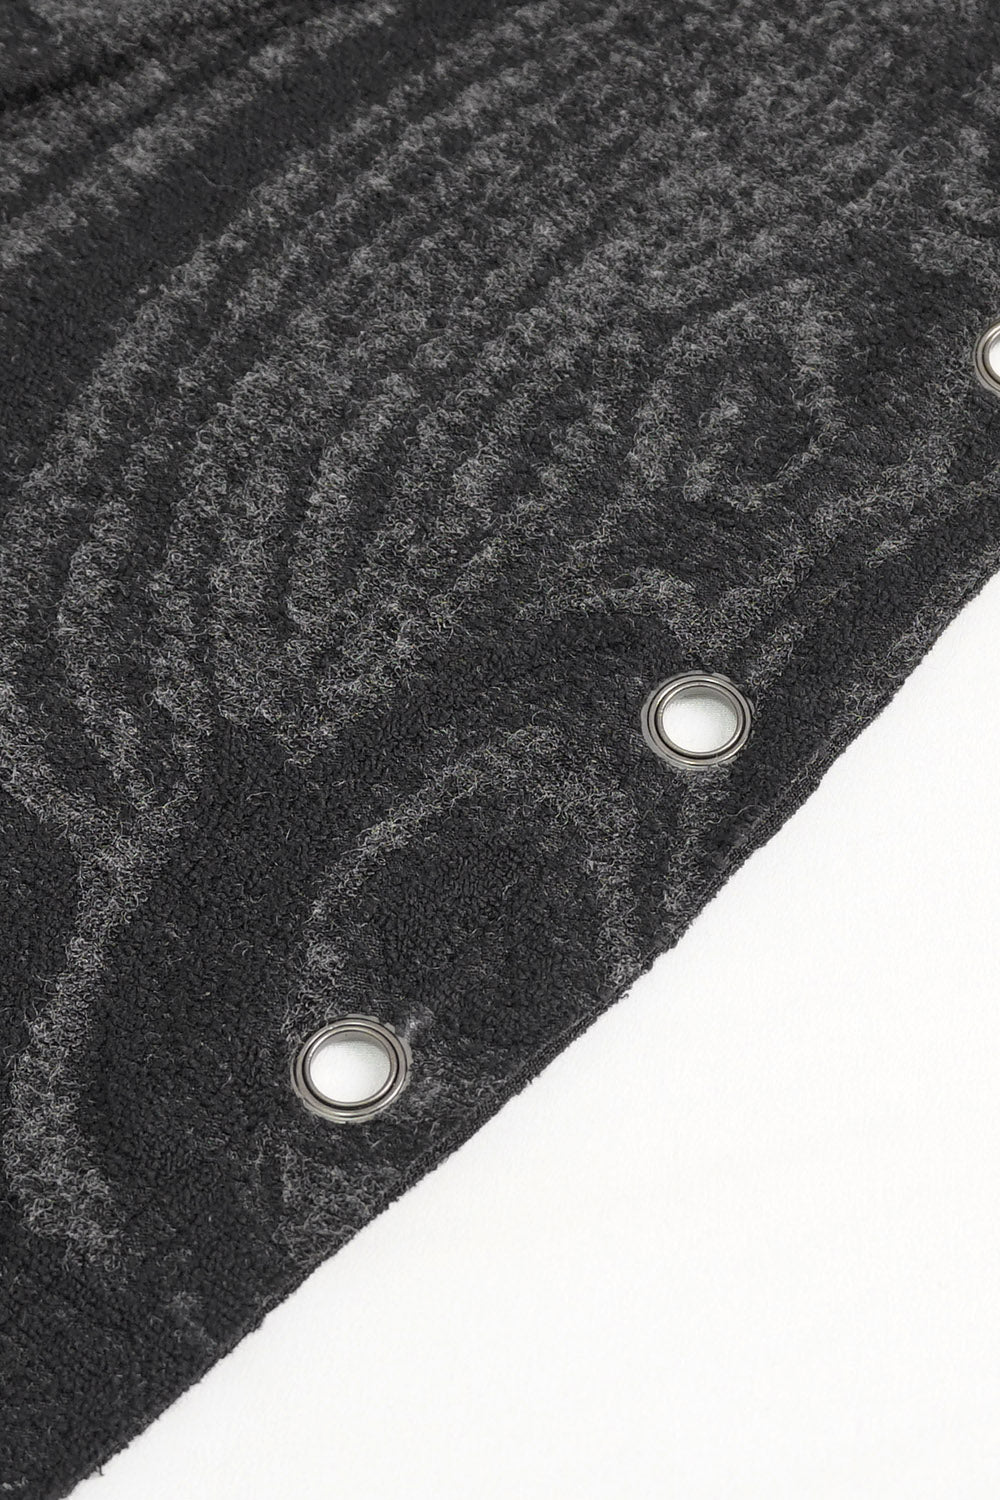 black and grey spiral fabric cardigan